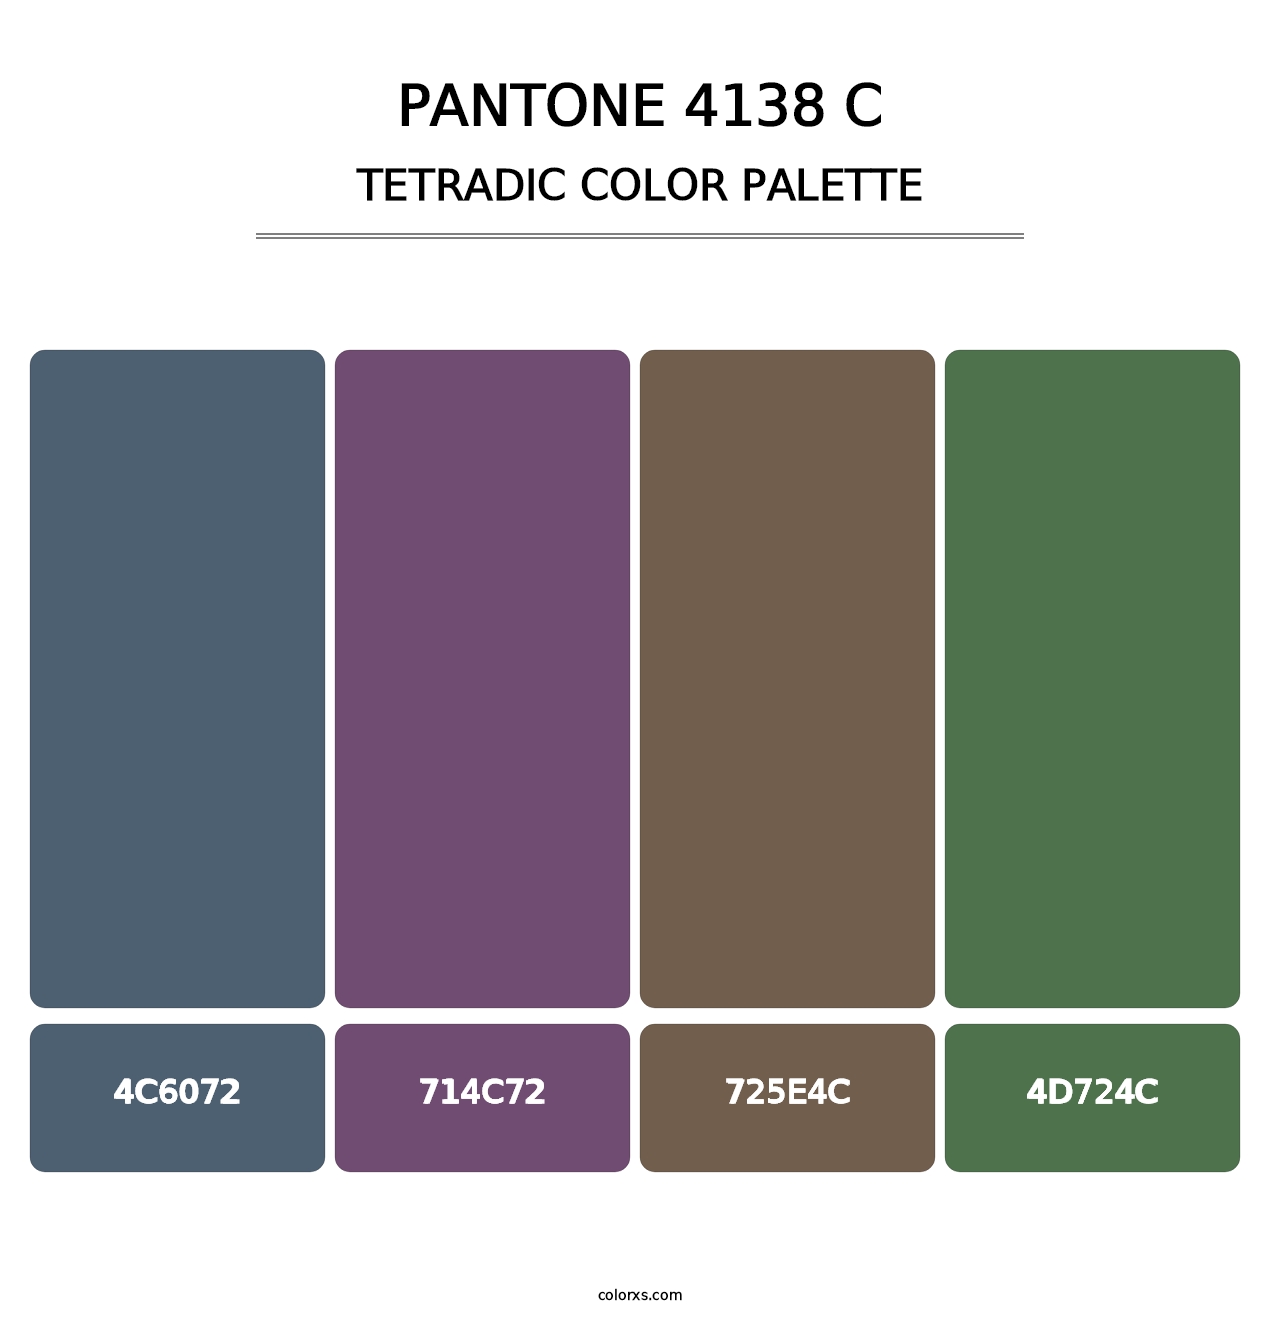 PANTONE 4138 C - Tetradic Color Palette